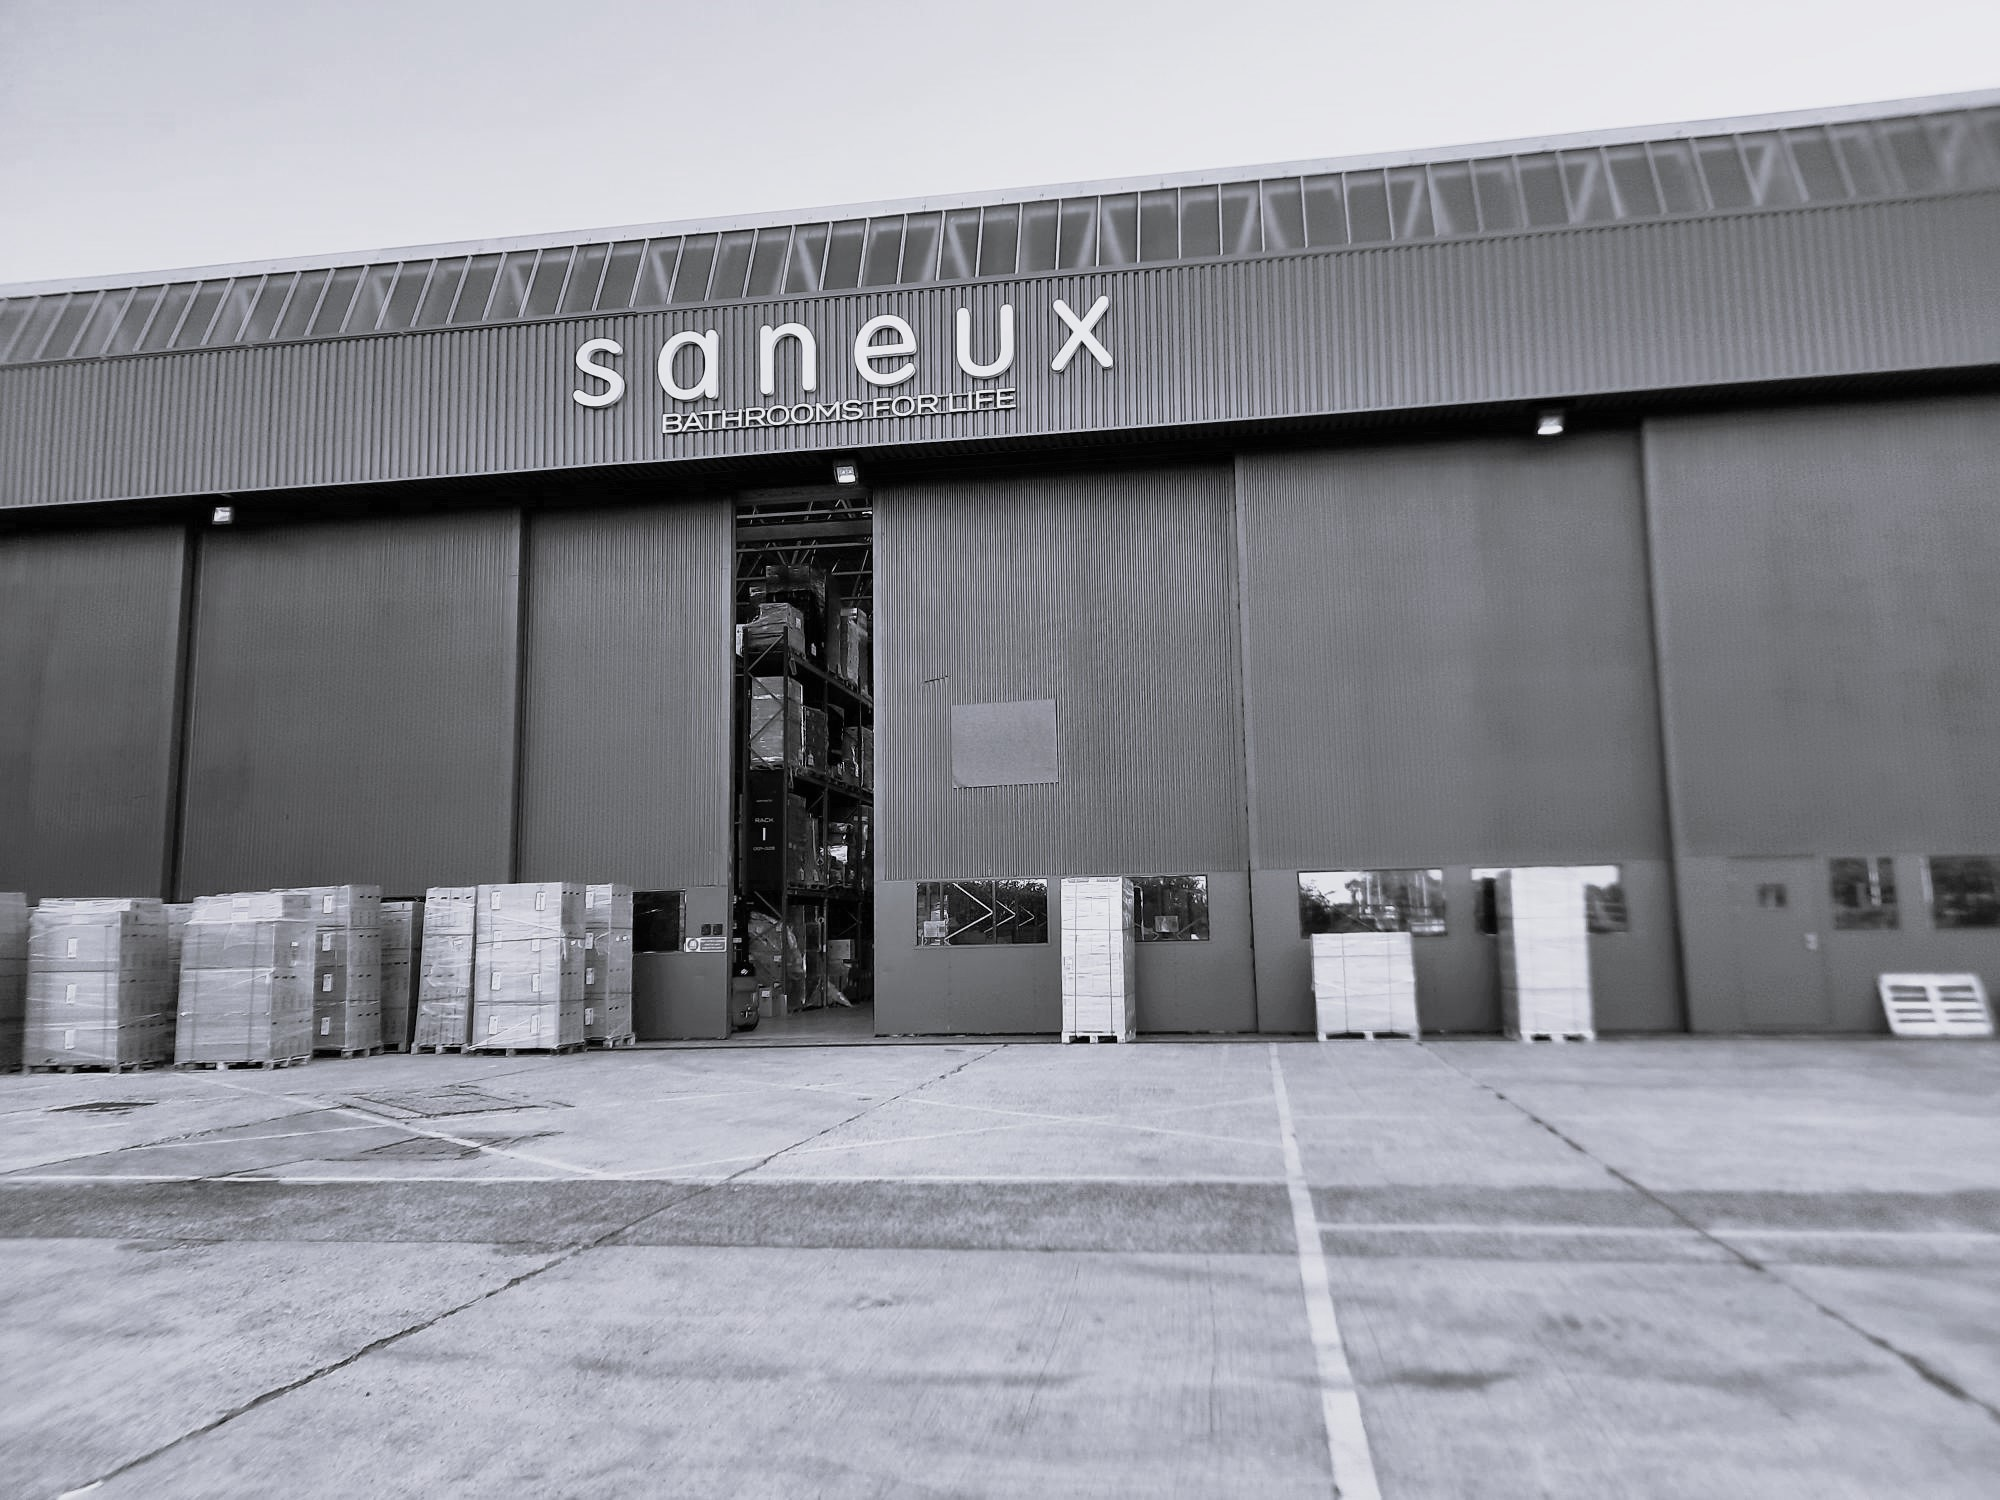 Saneux Distribution Centre Gatwick